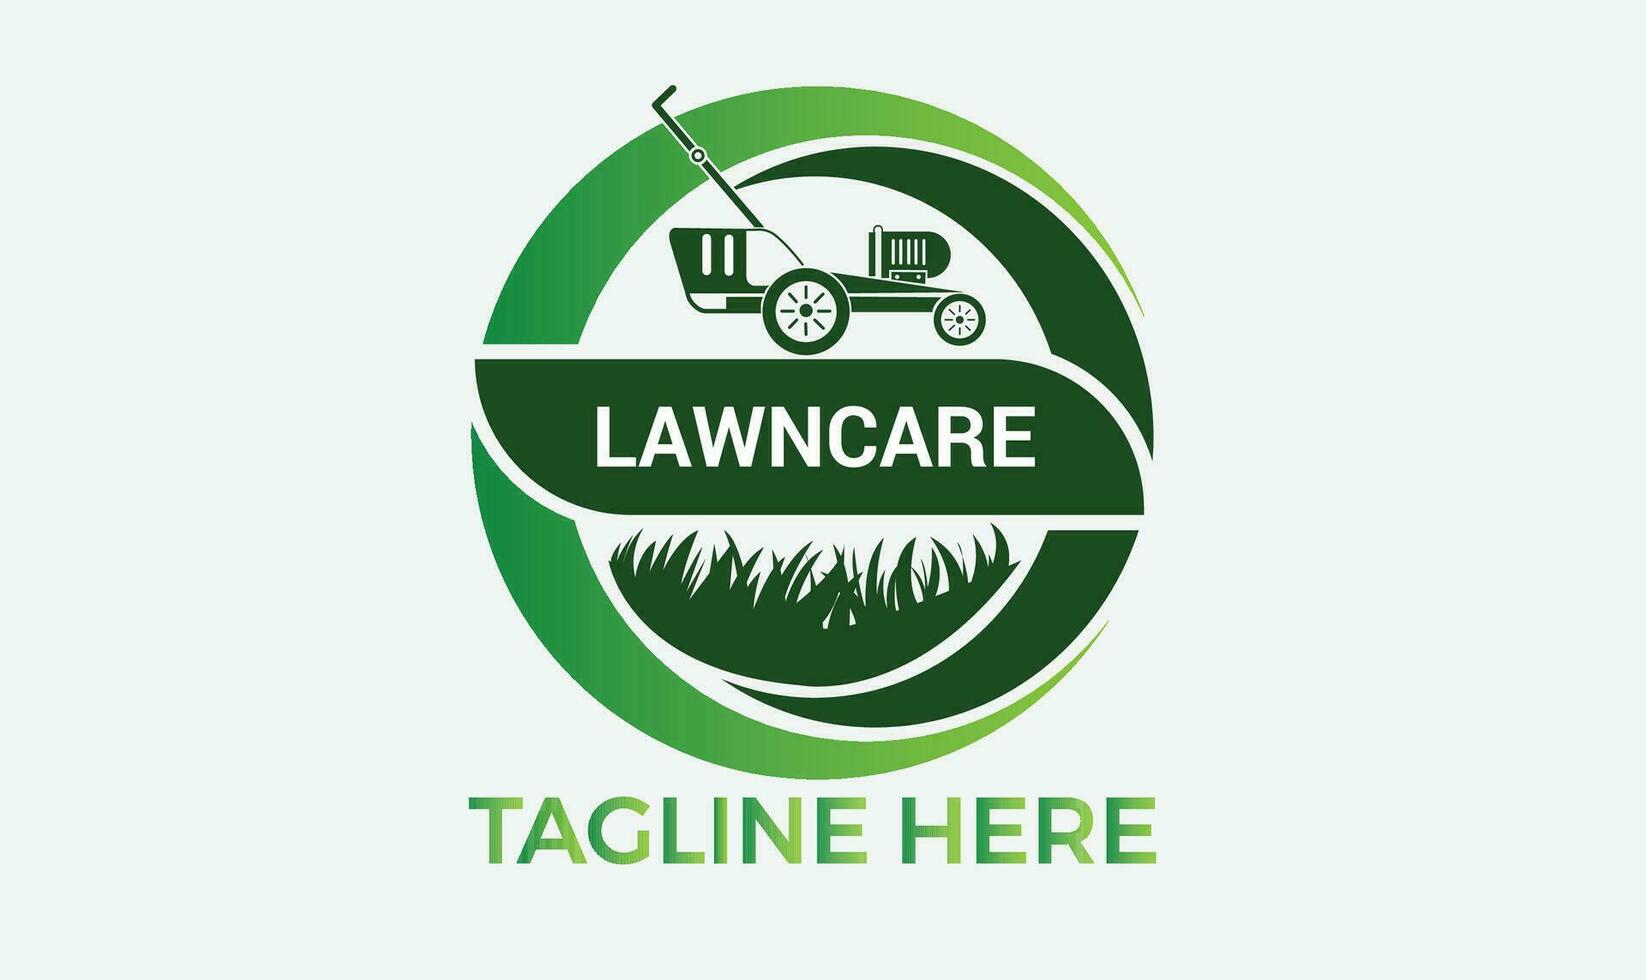 Vector lawn care logo design made of color pieces, lawncare logo